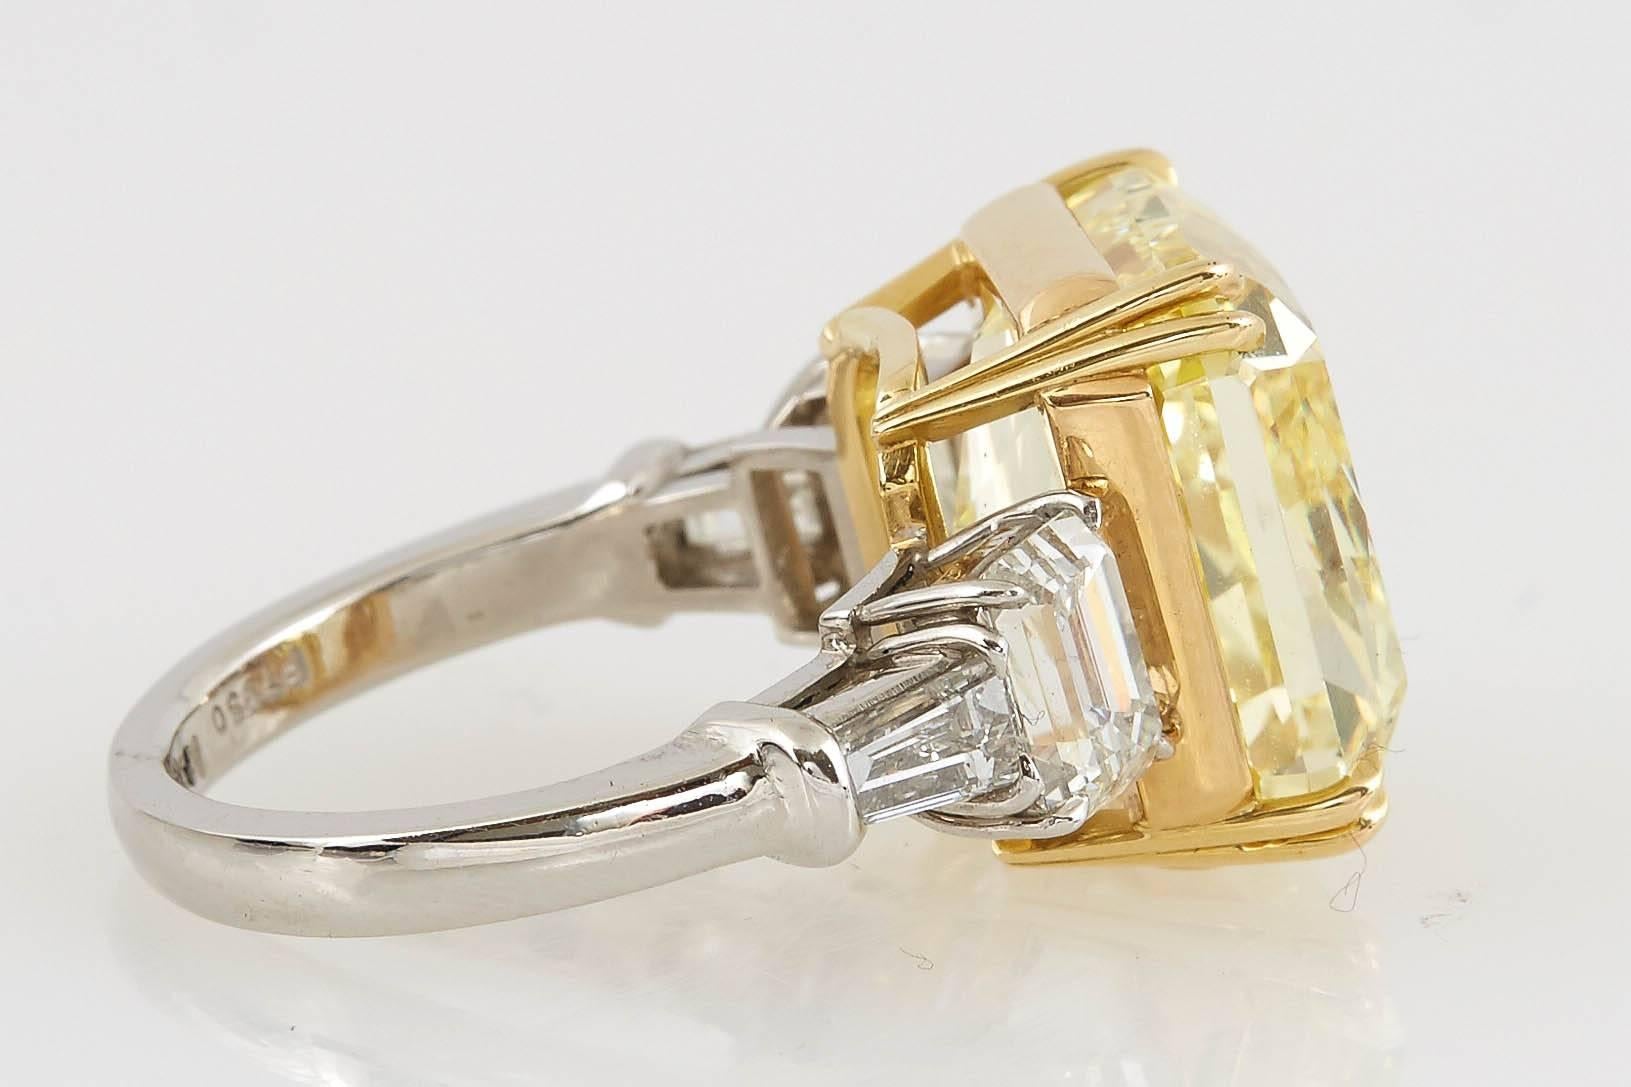 Radiant Cut GIA Certified 15.37 Carat Natural Fancy Intense Yellow Diamond Ring